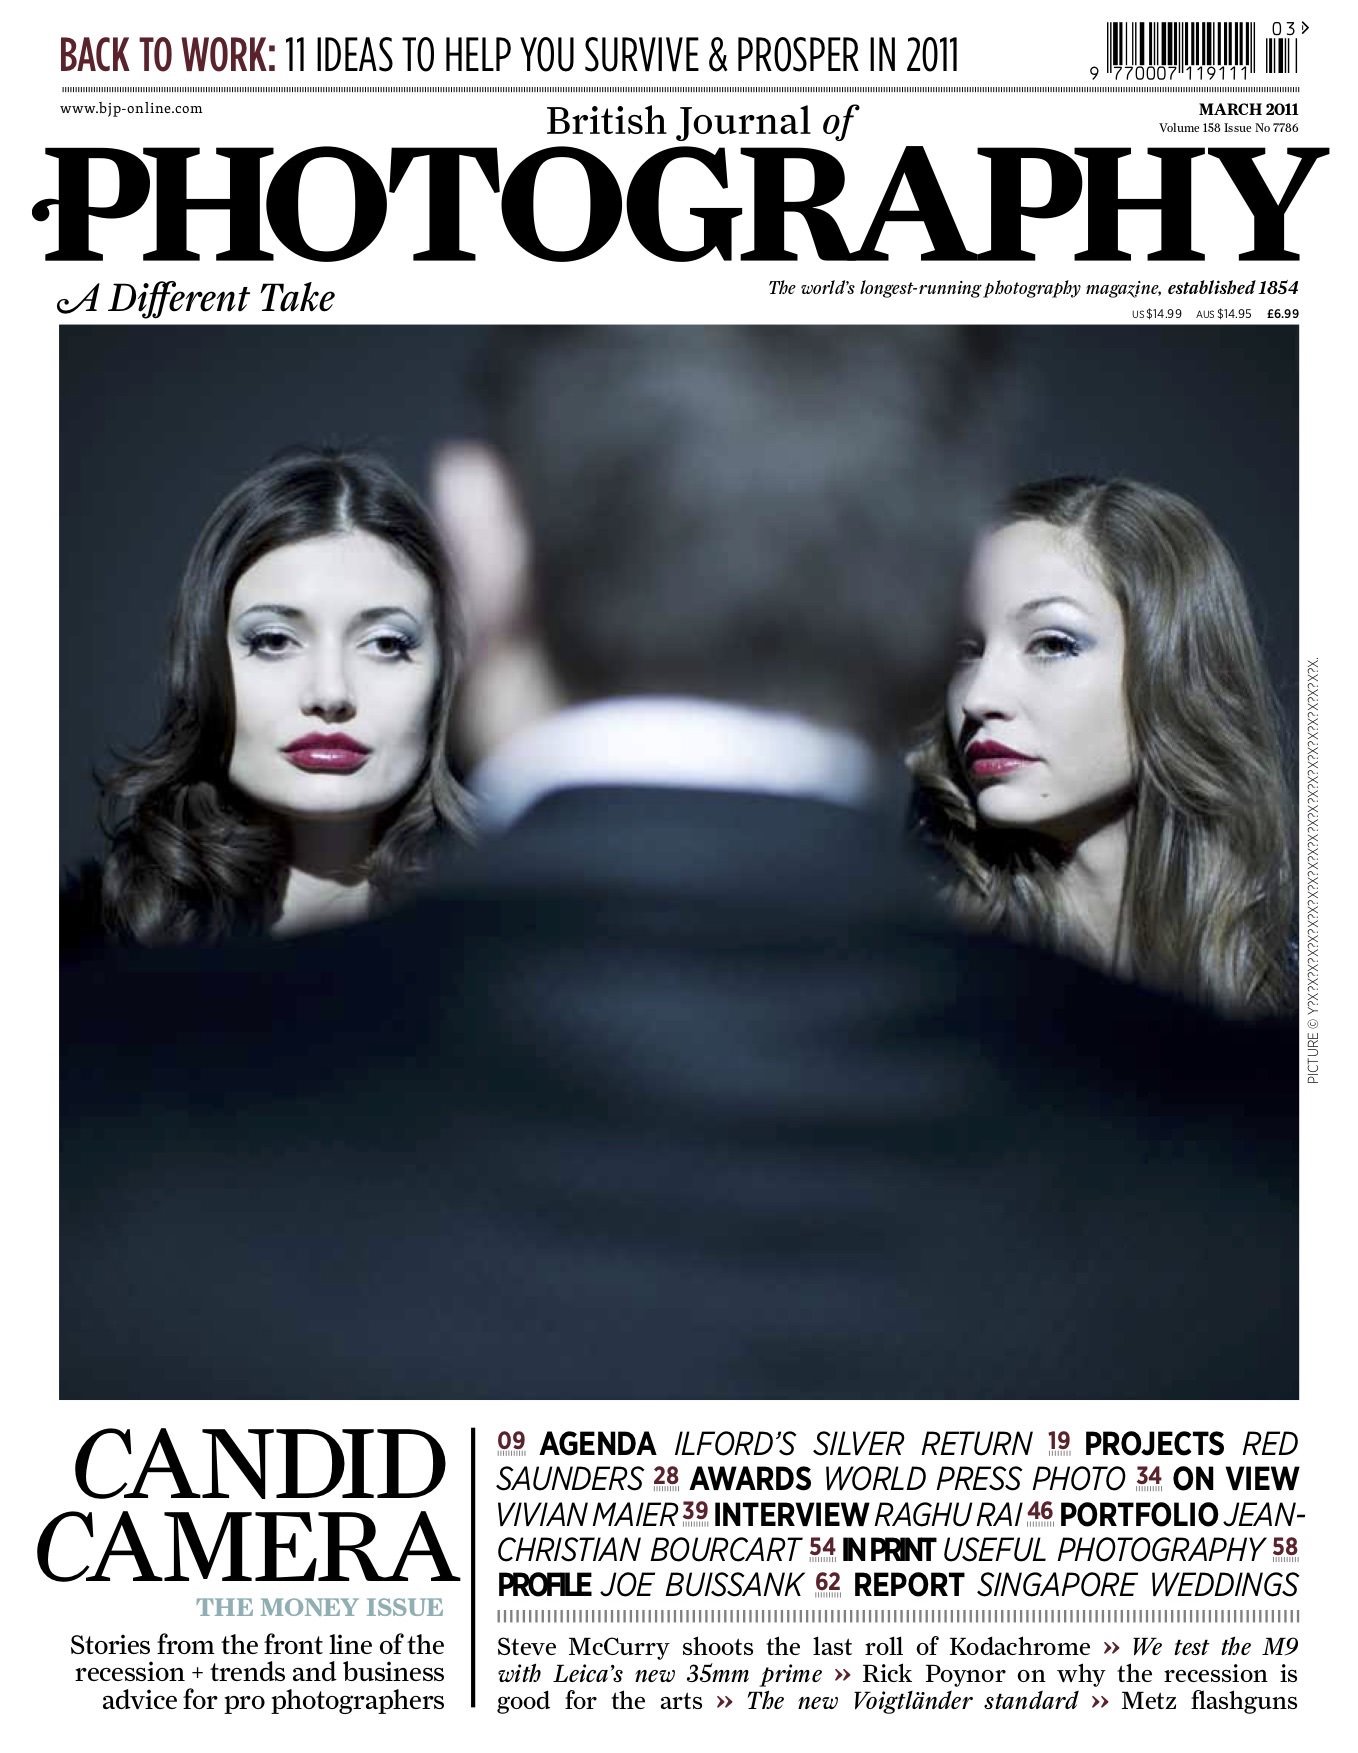 British Journal of Photography Magazine cover